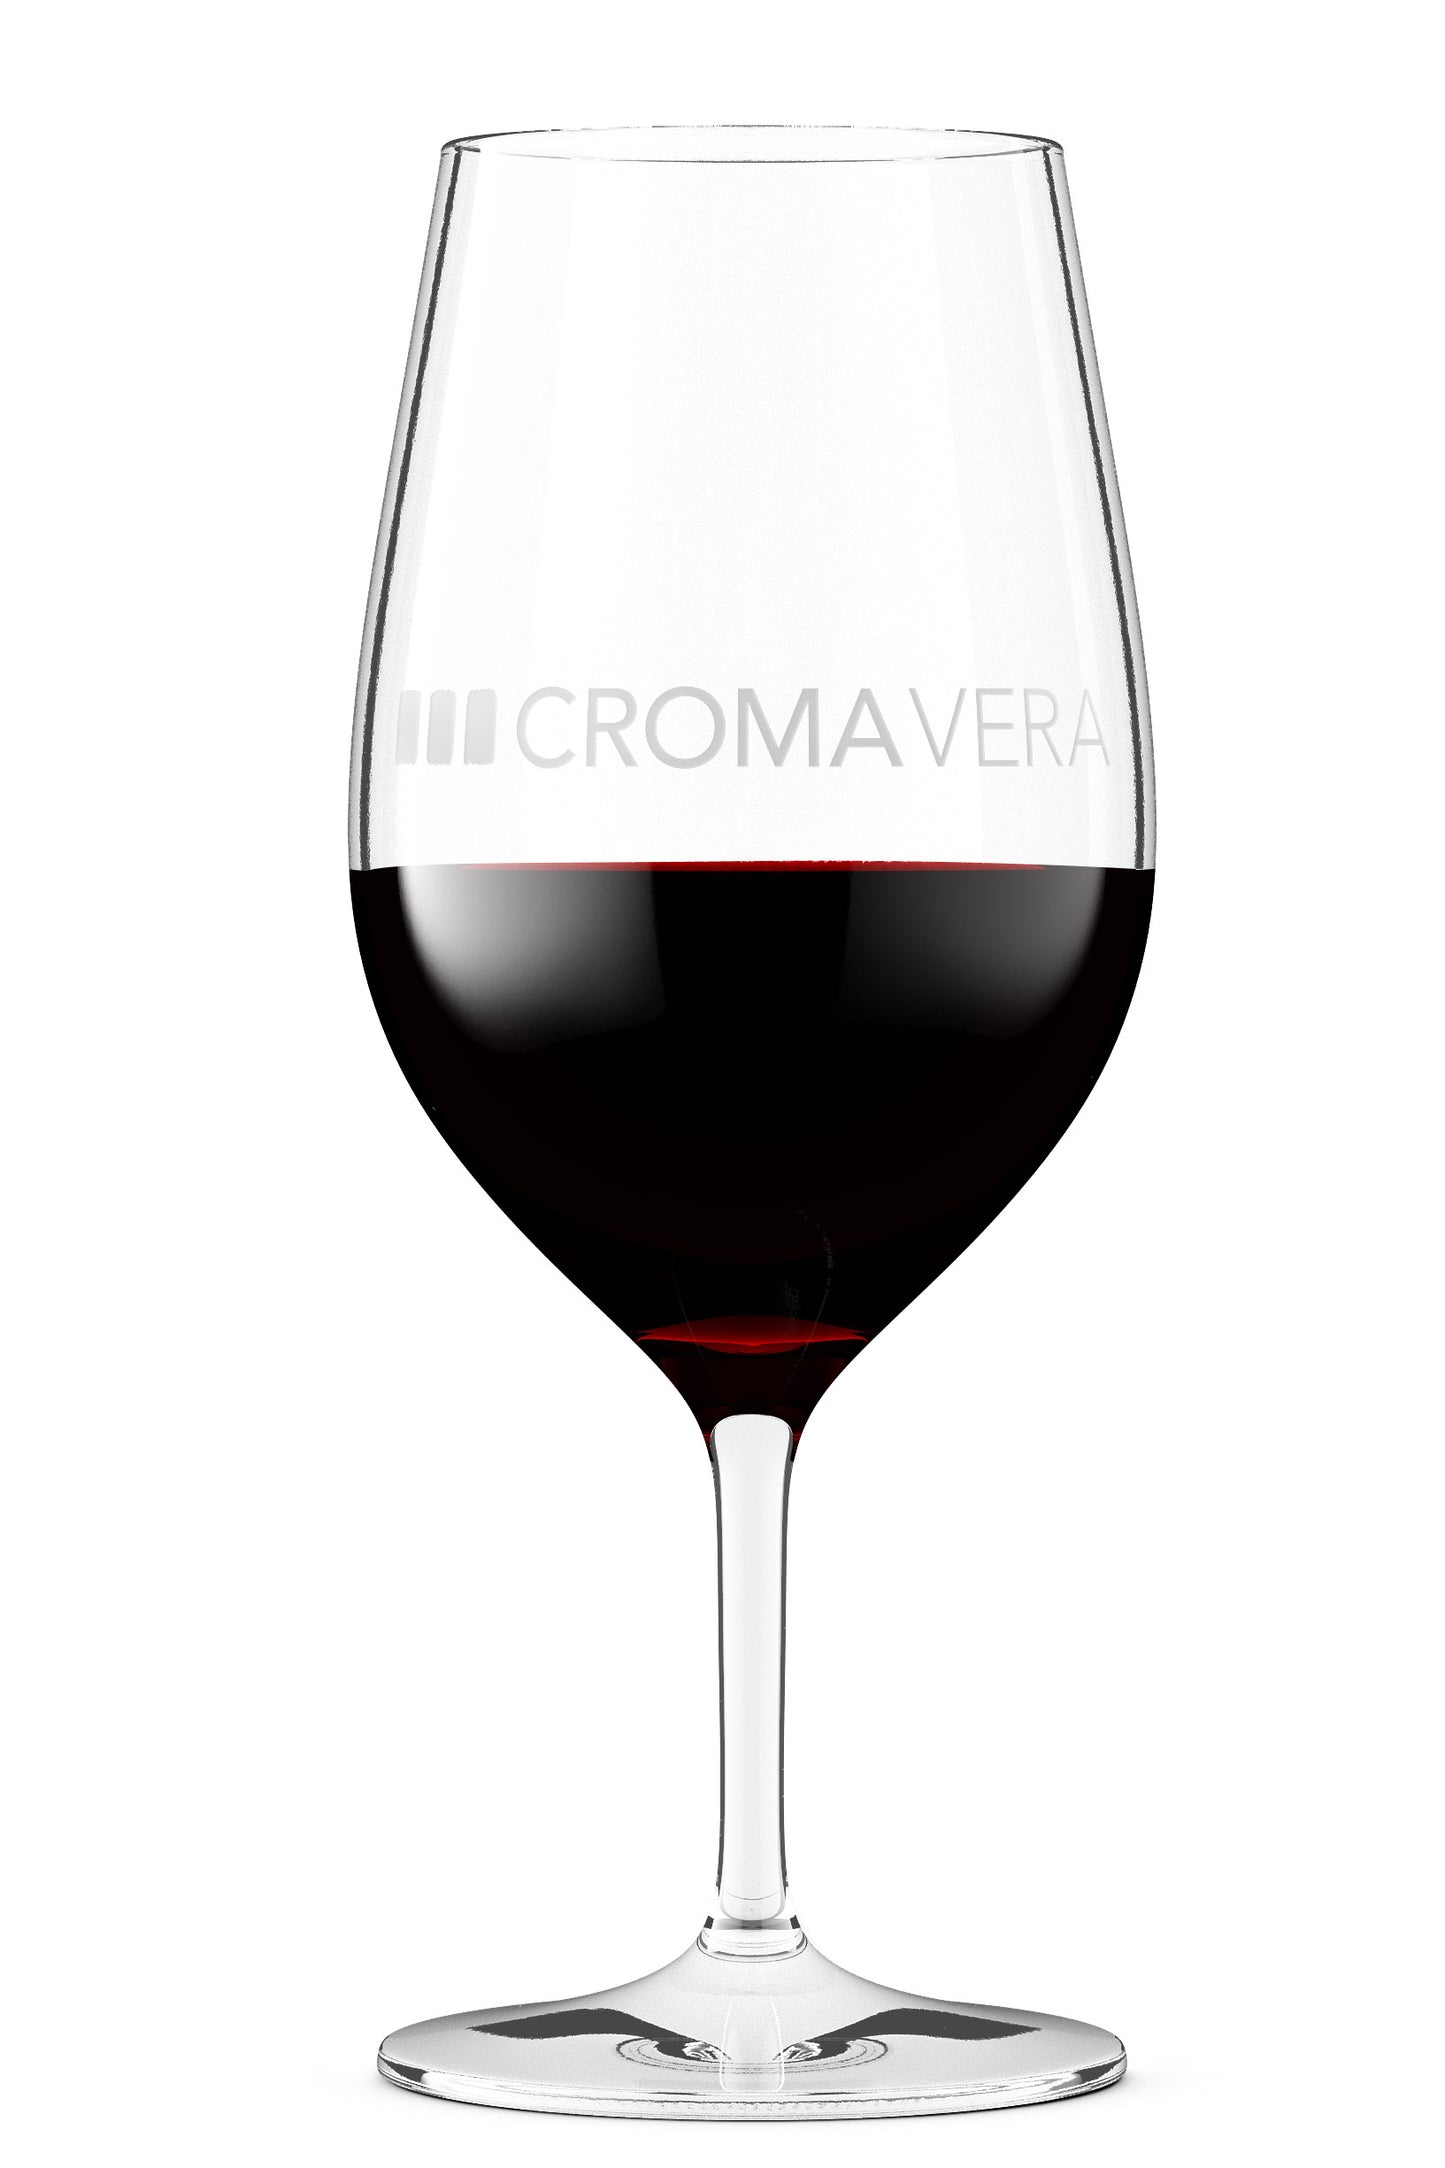 A glass of Croma Vera Wines Revelación X